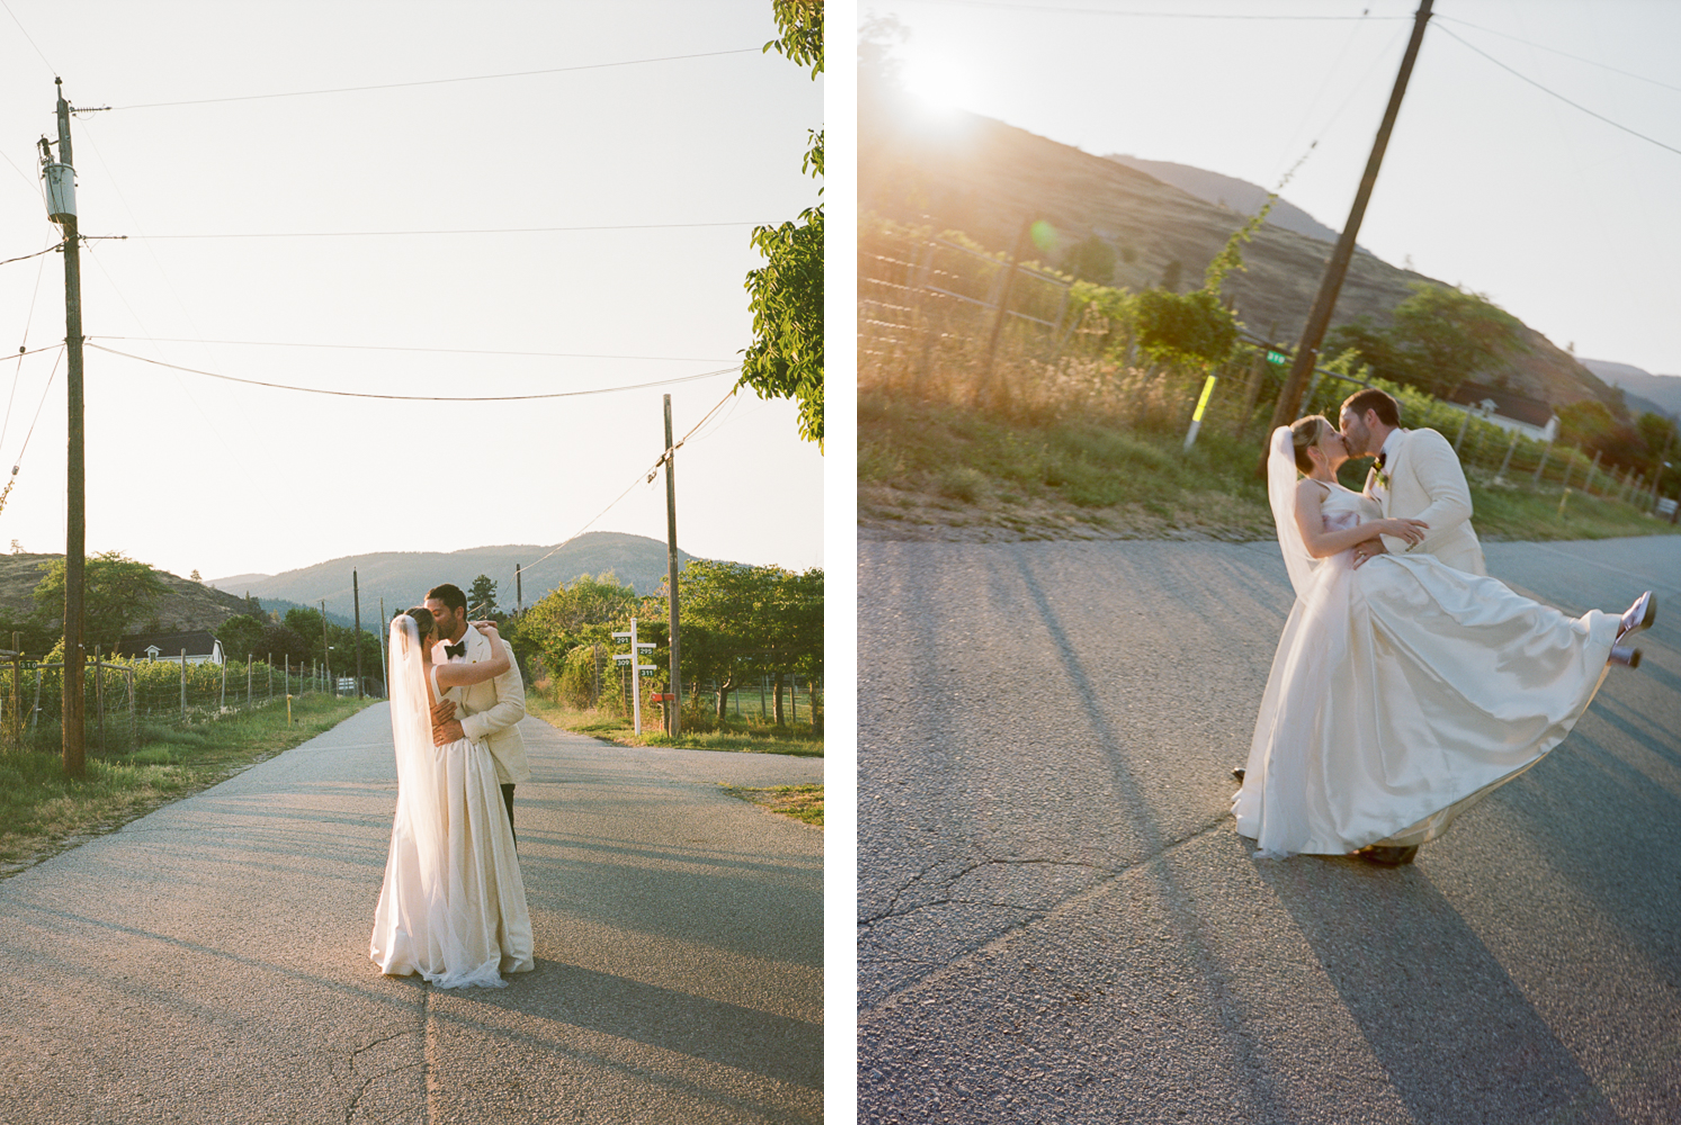 Linden-Gardens-Wedding-Venue-Okanagan-Penticton-Photography-Film-Analog-55.PNG